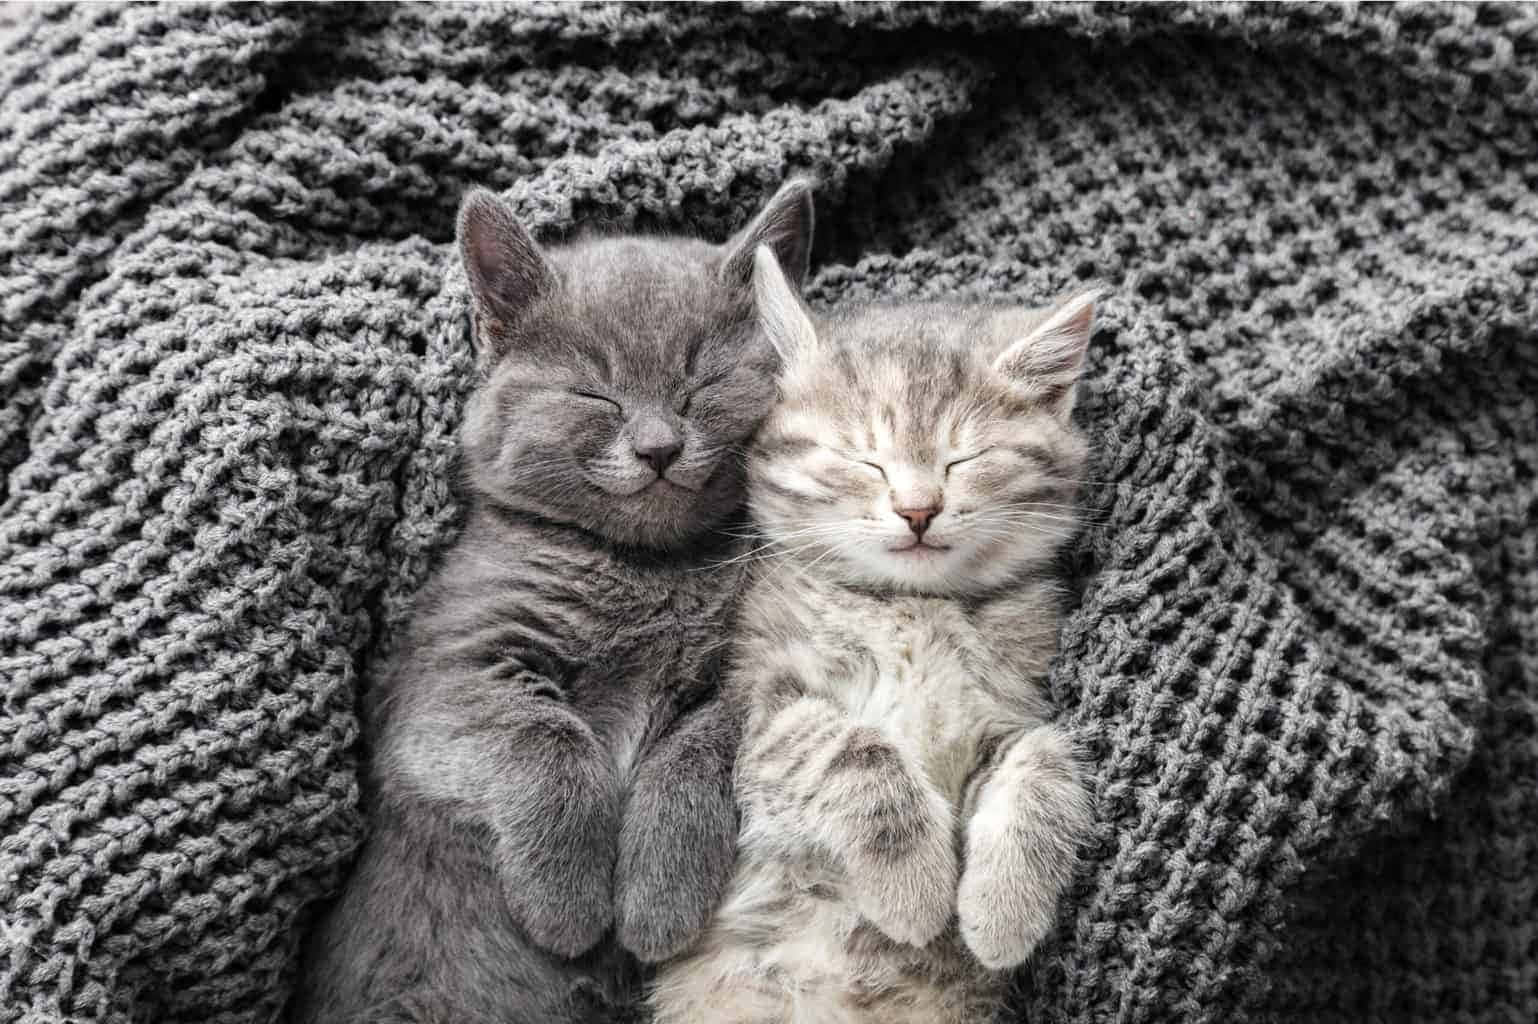 Adorable Kittens Seeking Love and Comfort